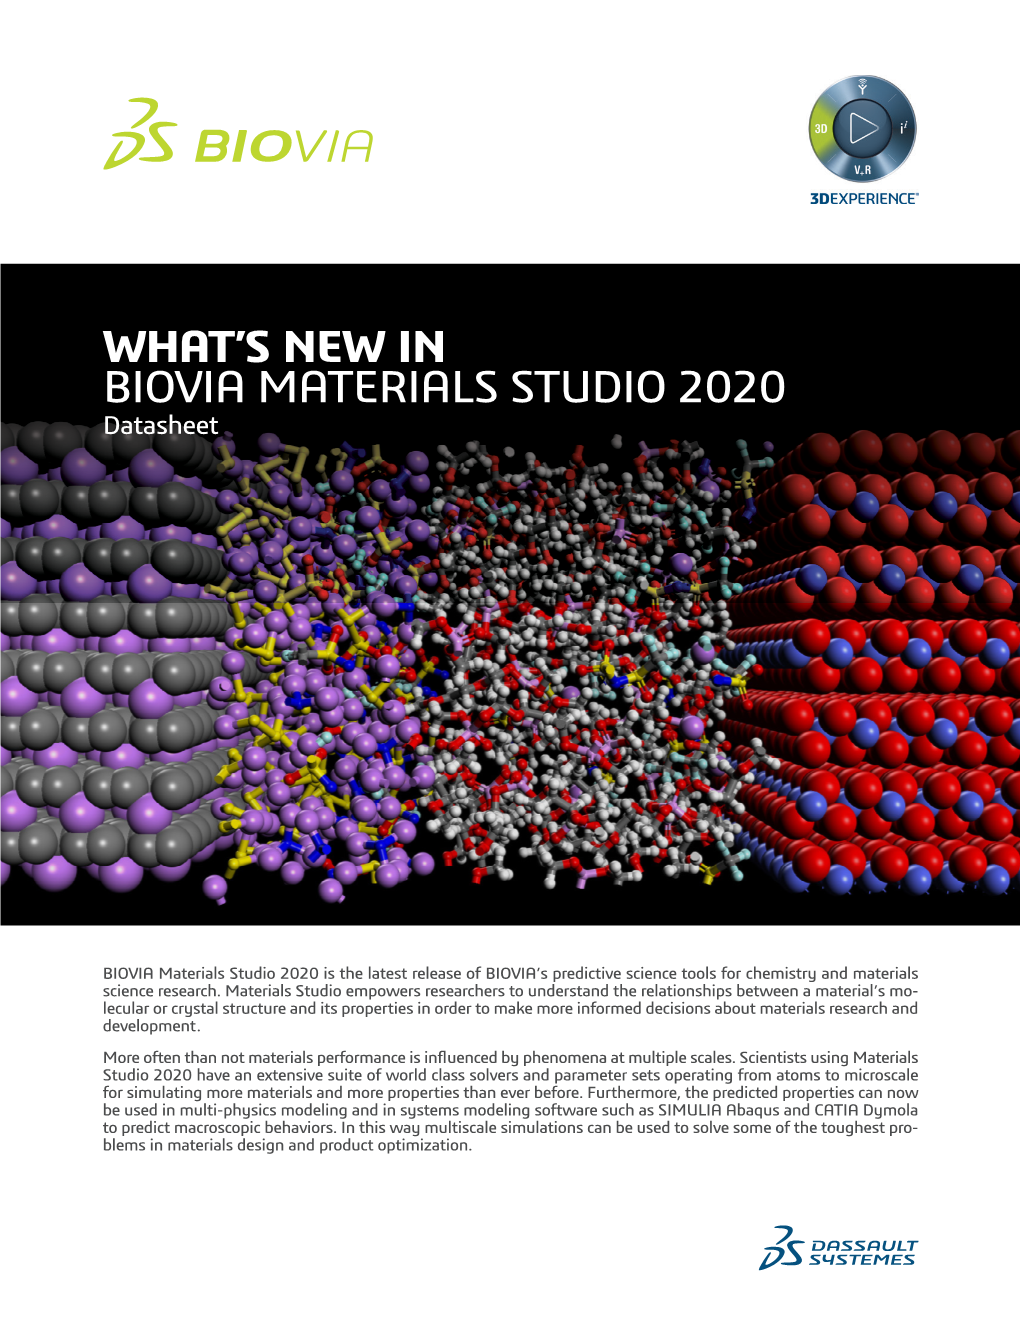 What's New in Biovia Materials Studio 2020